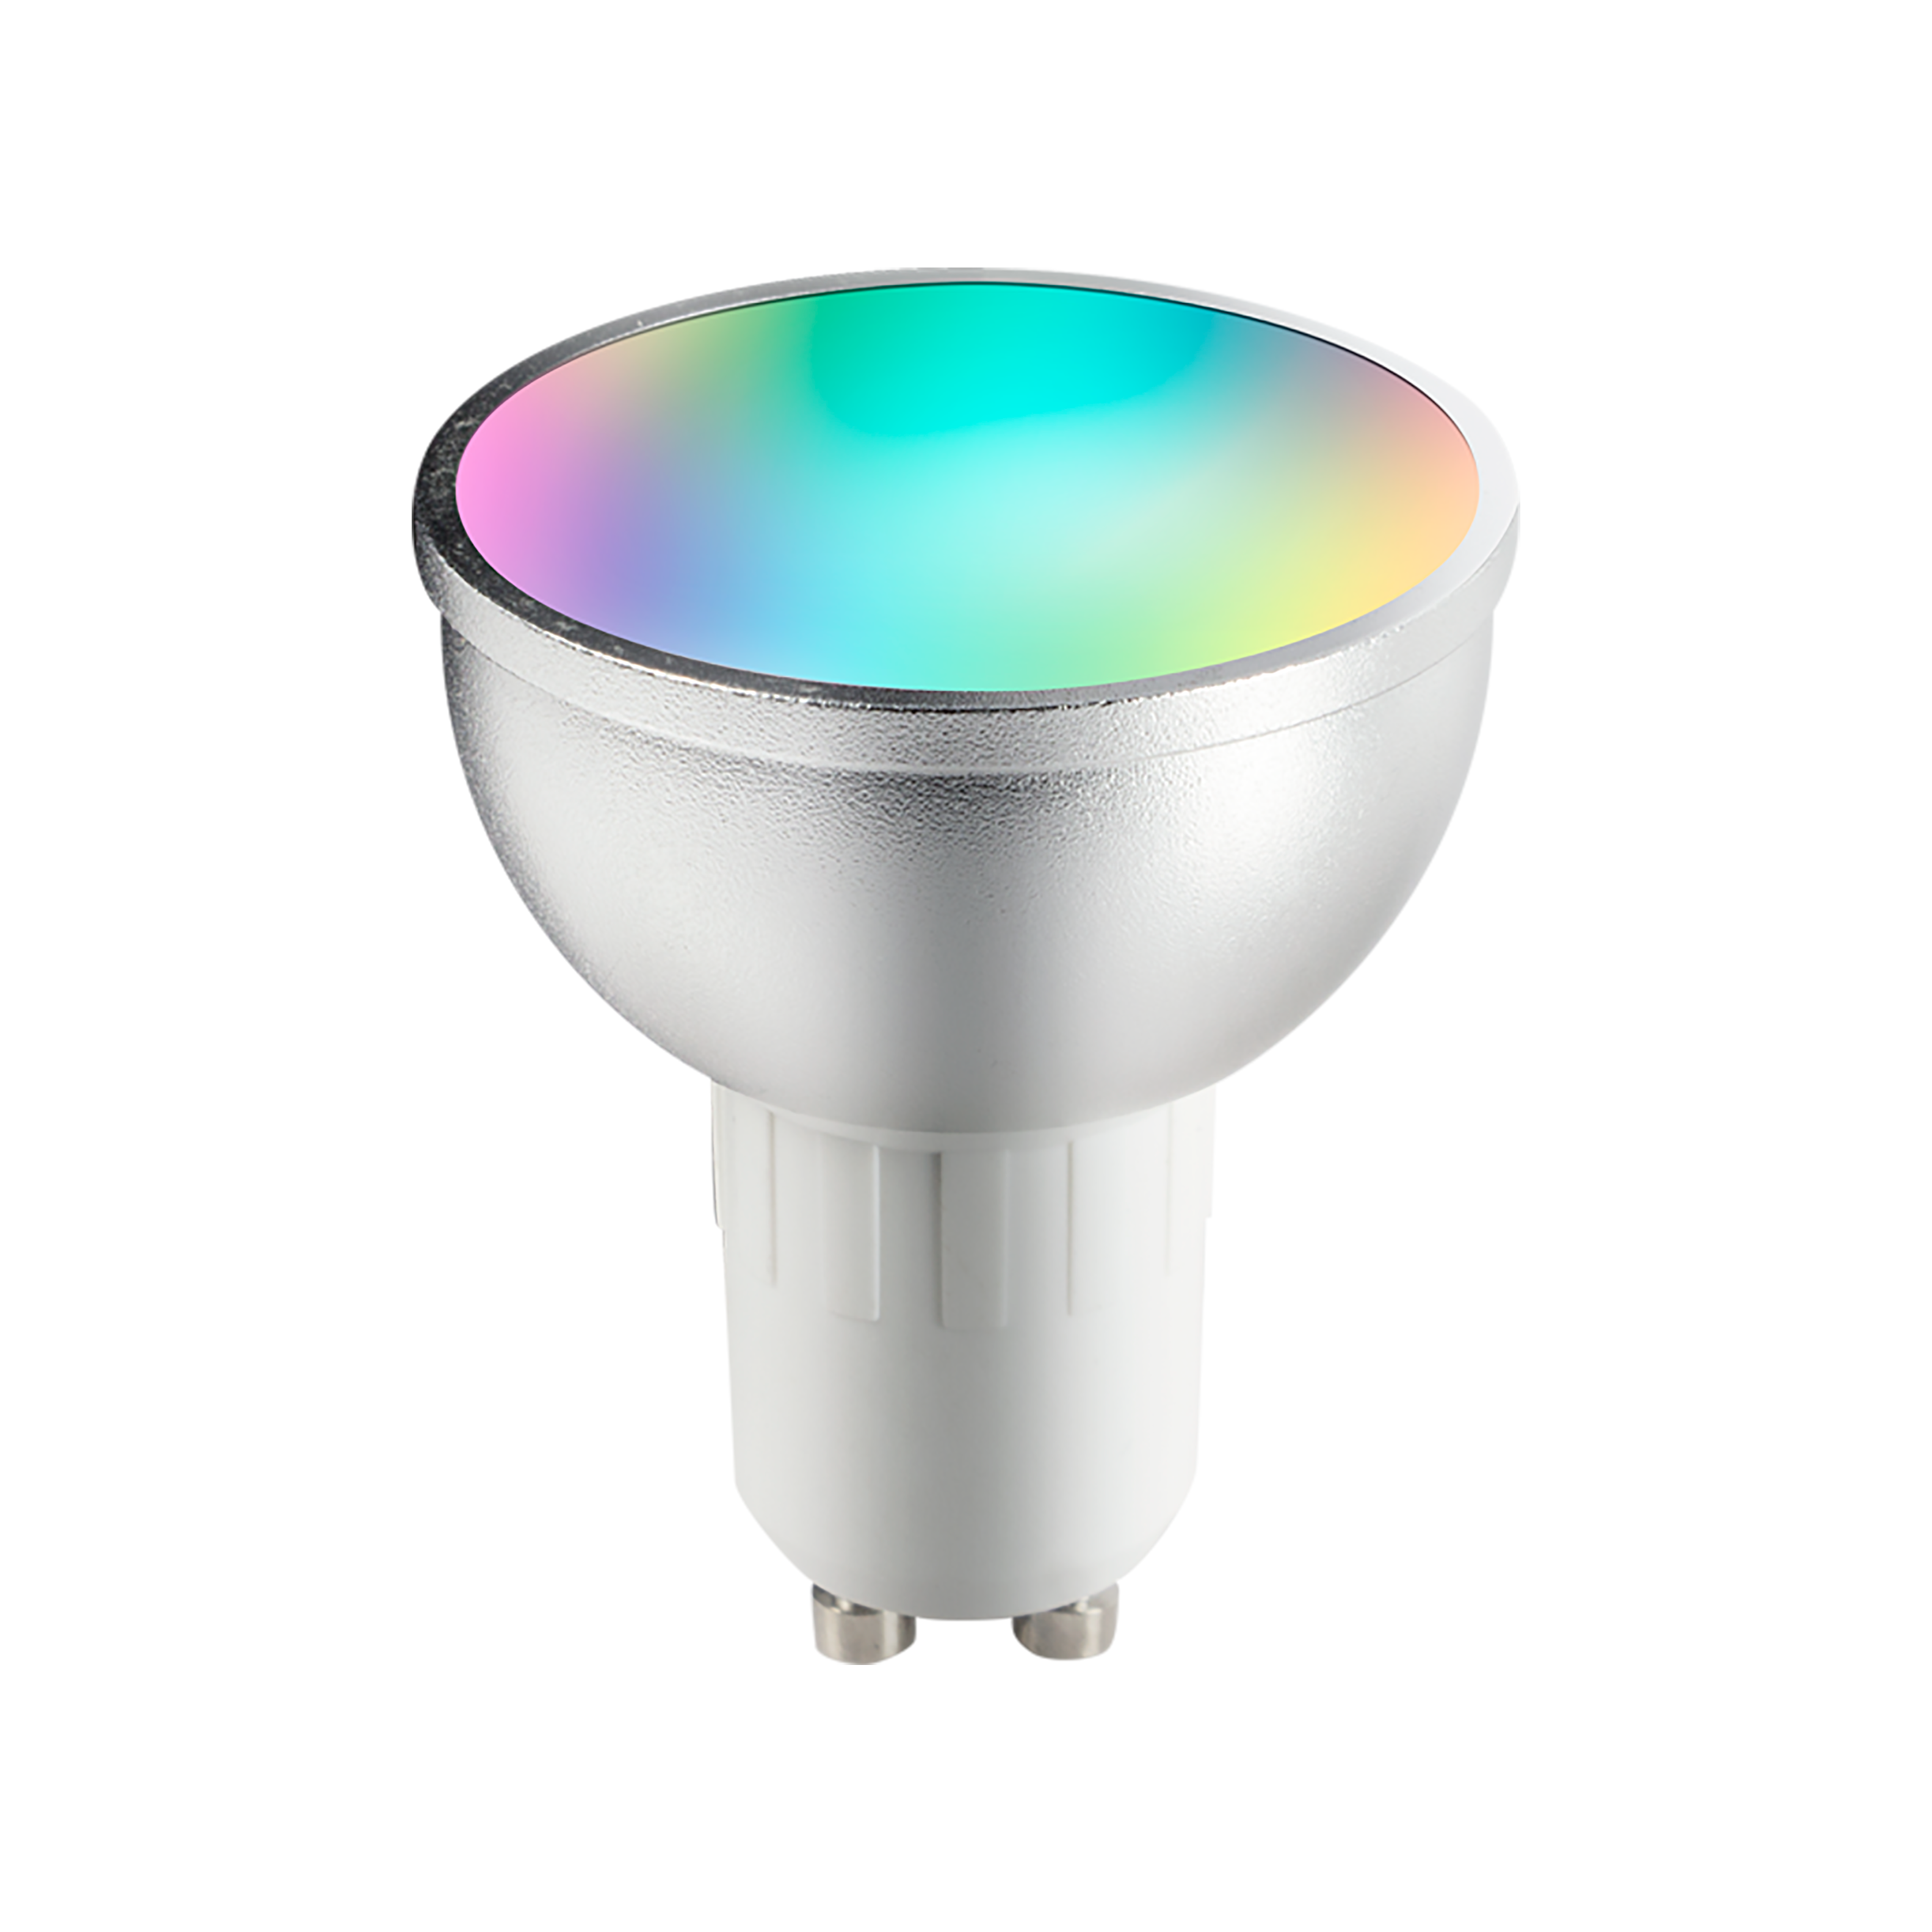 Unigreat cheap Tuya smart SAA approved smart wifi GU10 / GU5.3 rgbw led lamp light bulb